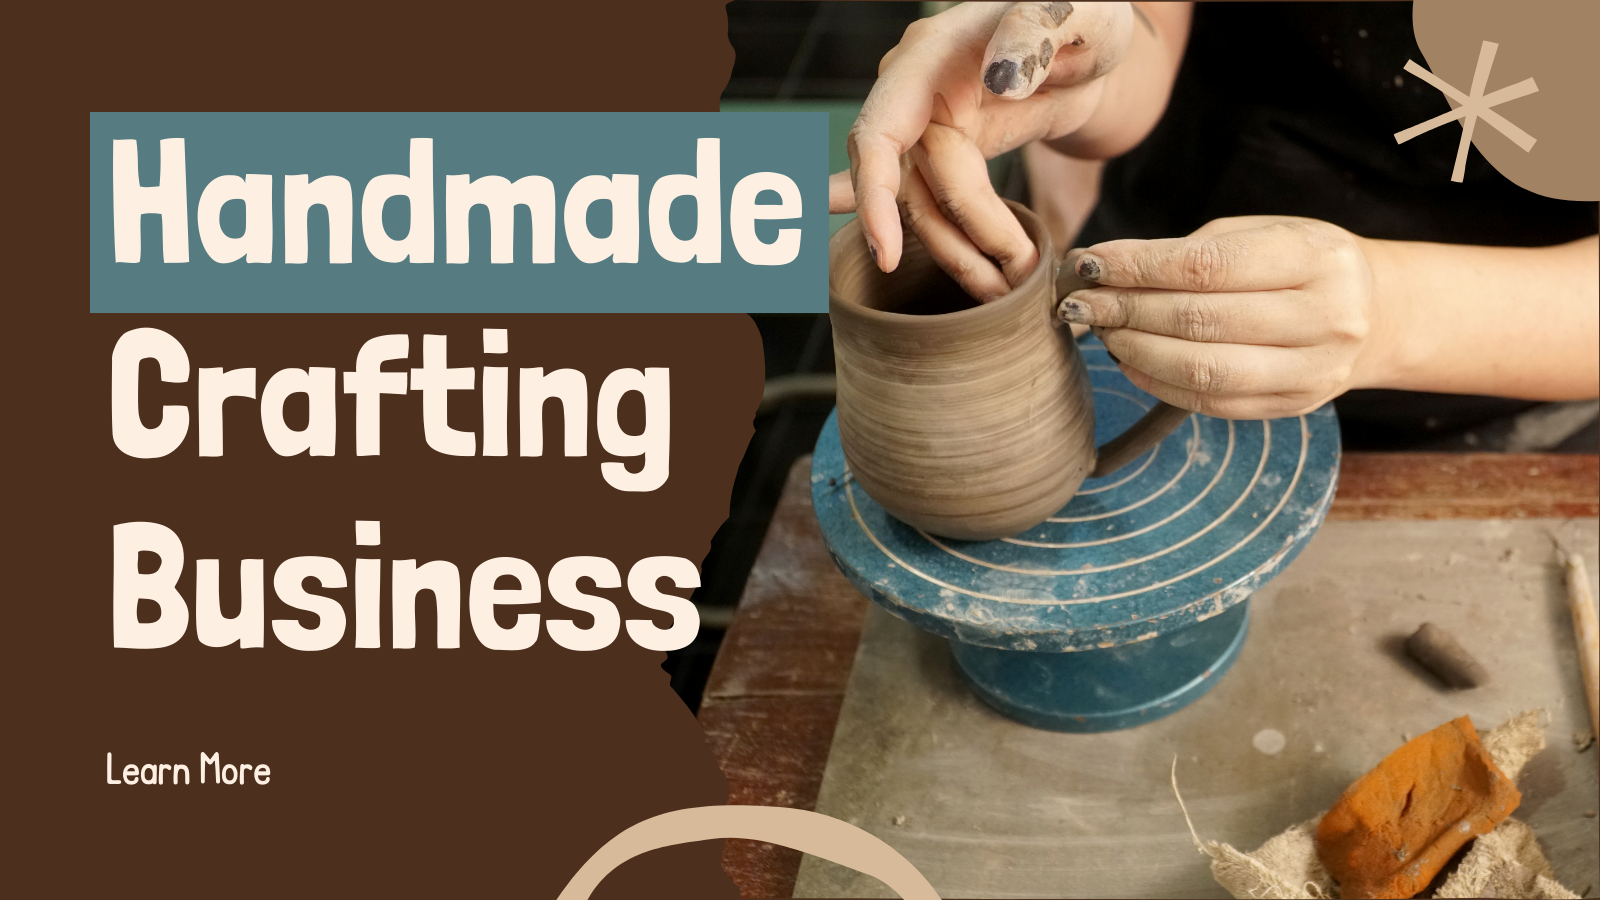 Handmade Crafting Business